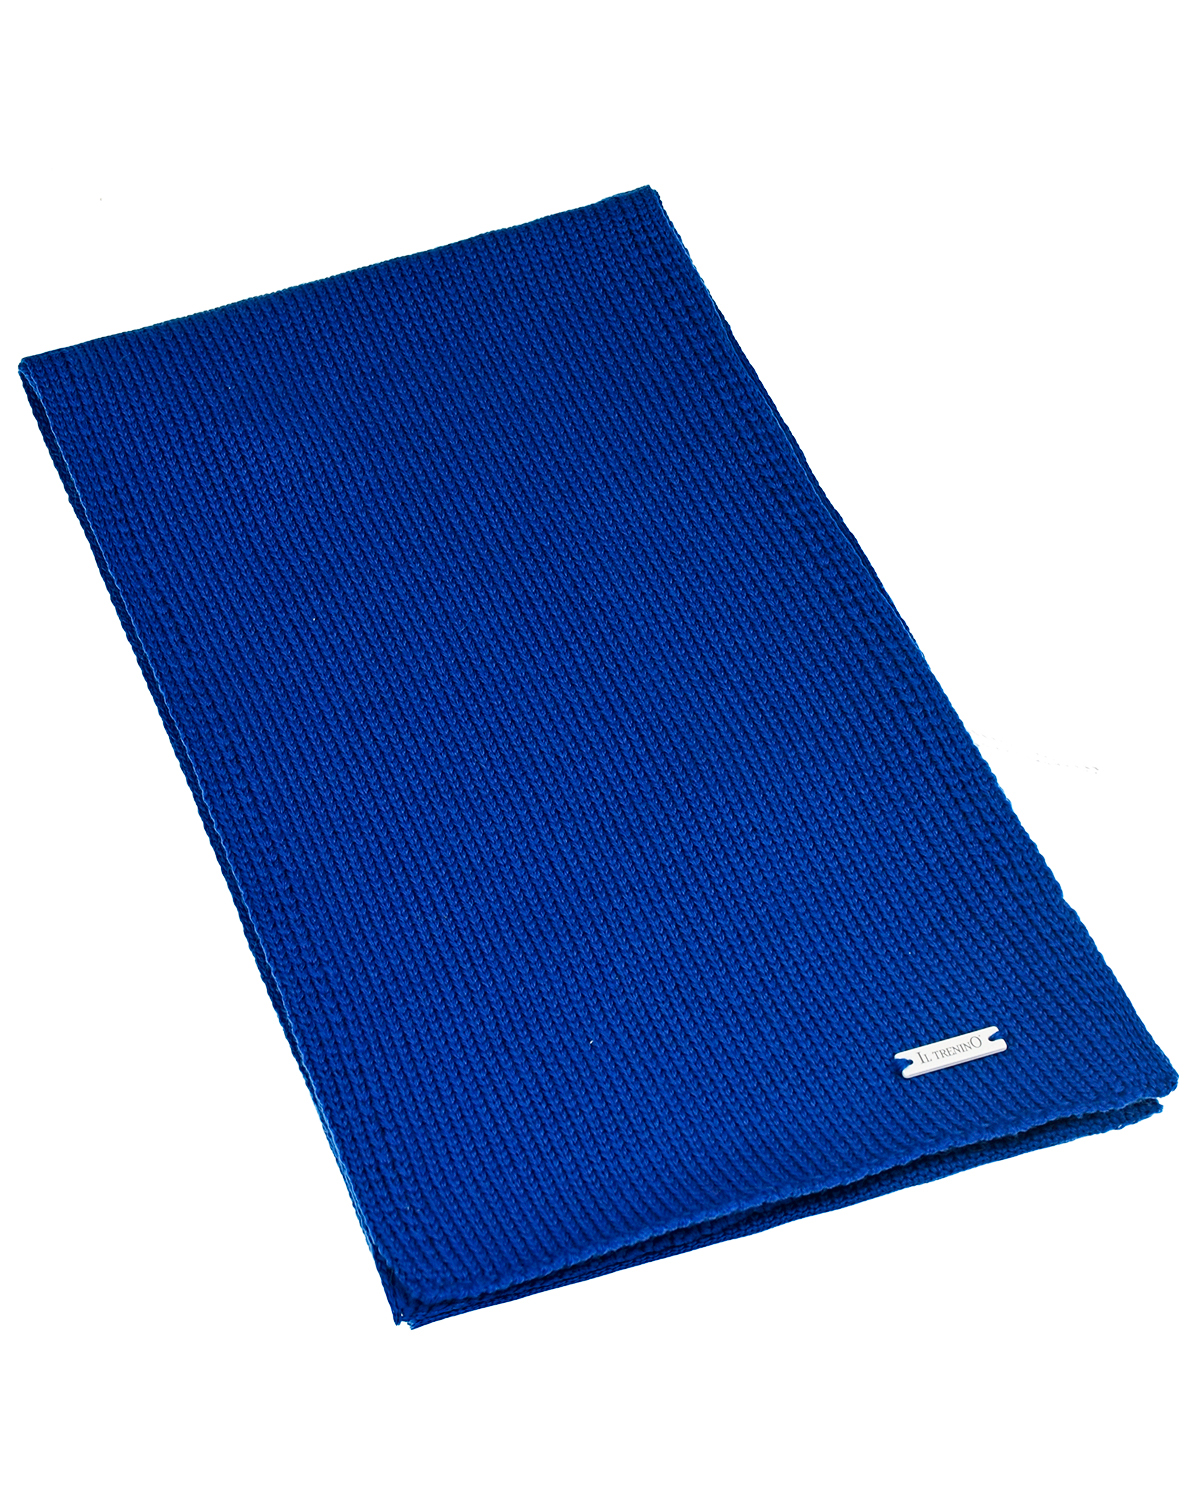 Ярко-синий шарф 134х20 см. Il Trenino детское, размер unica